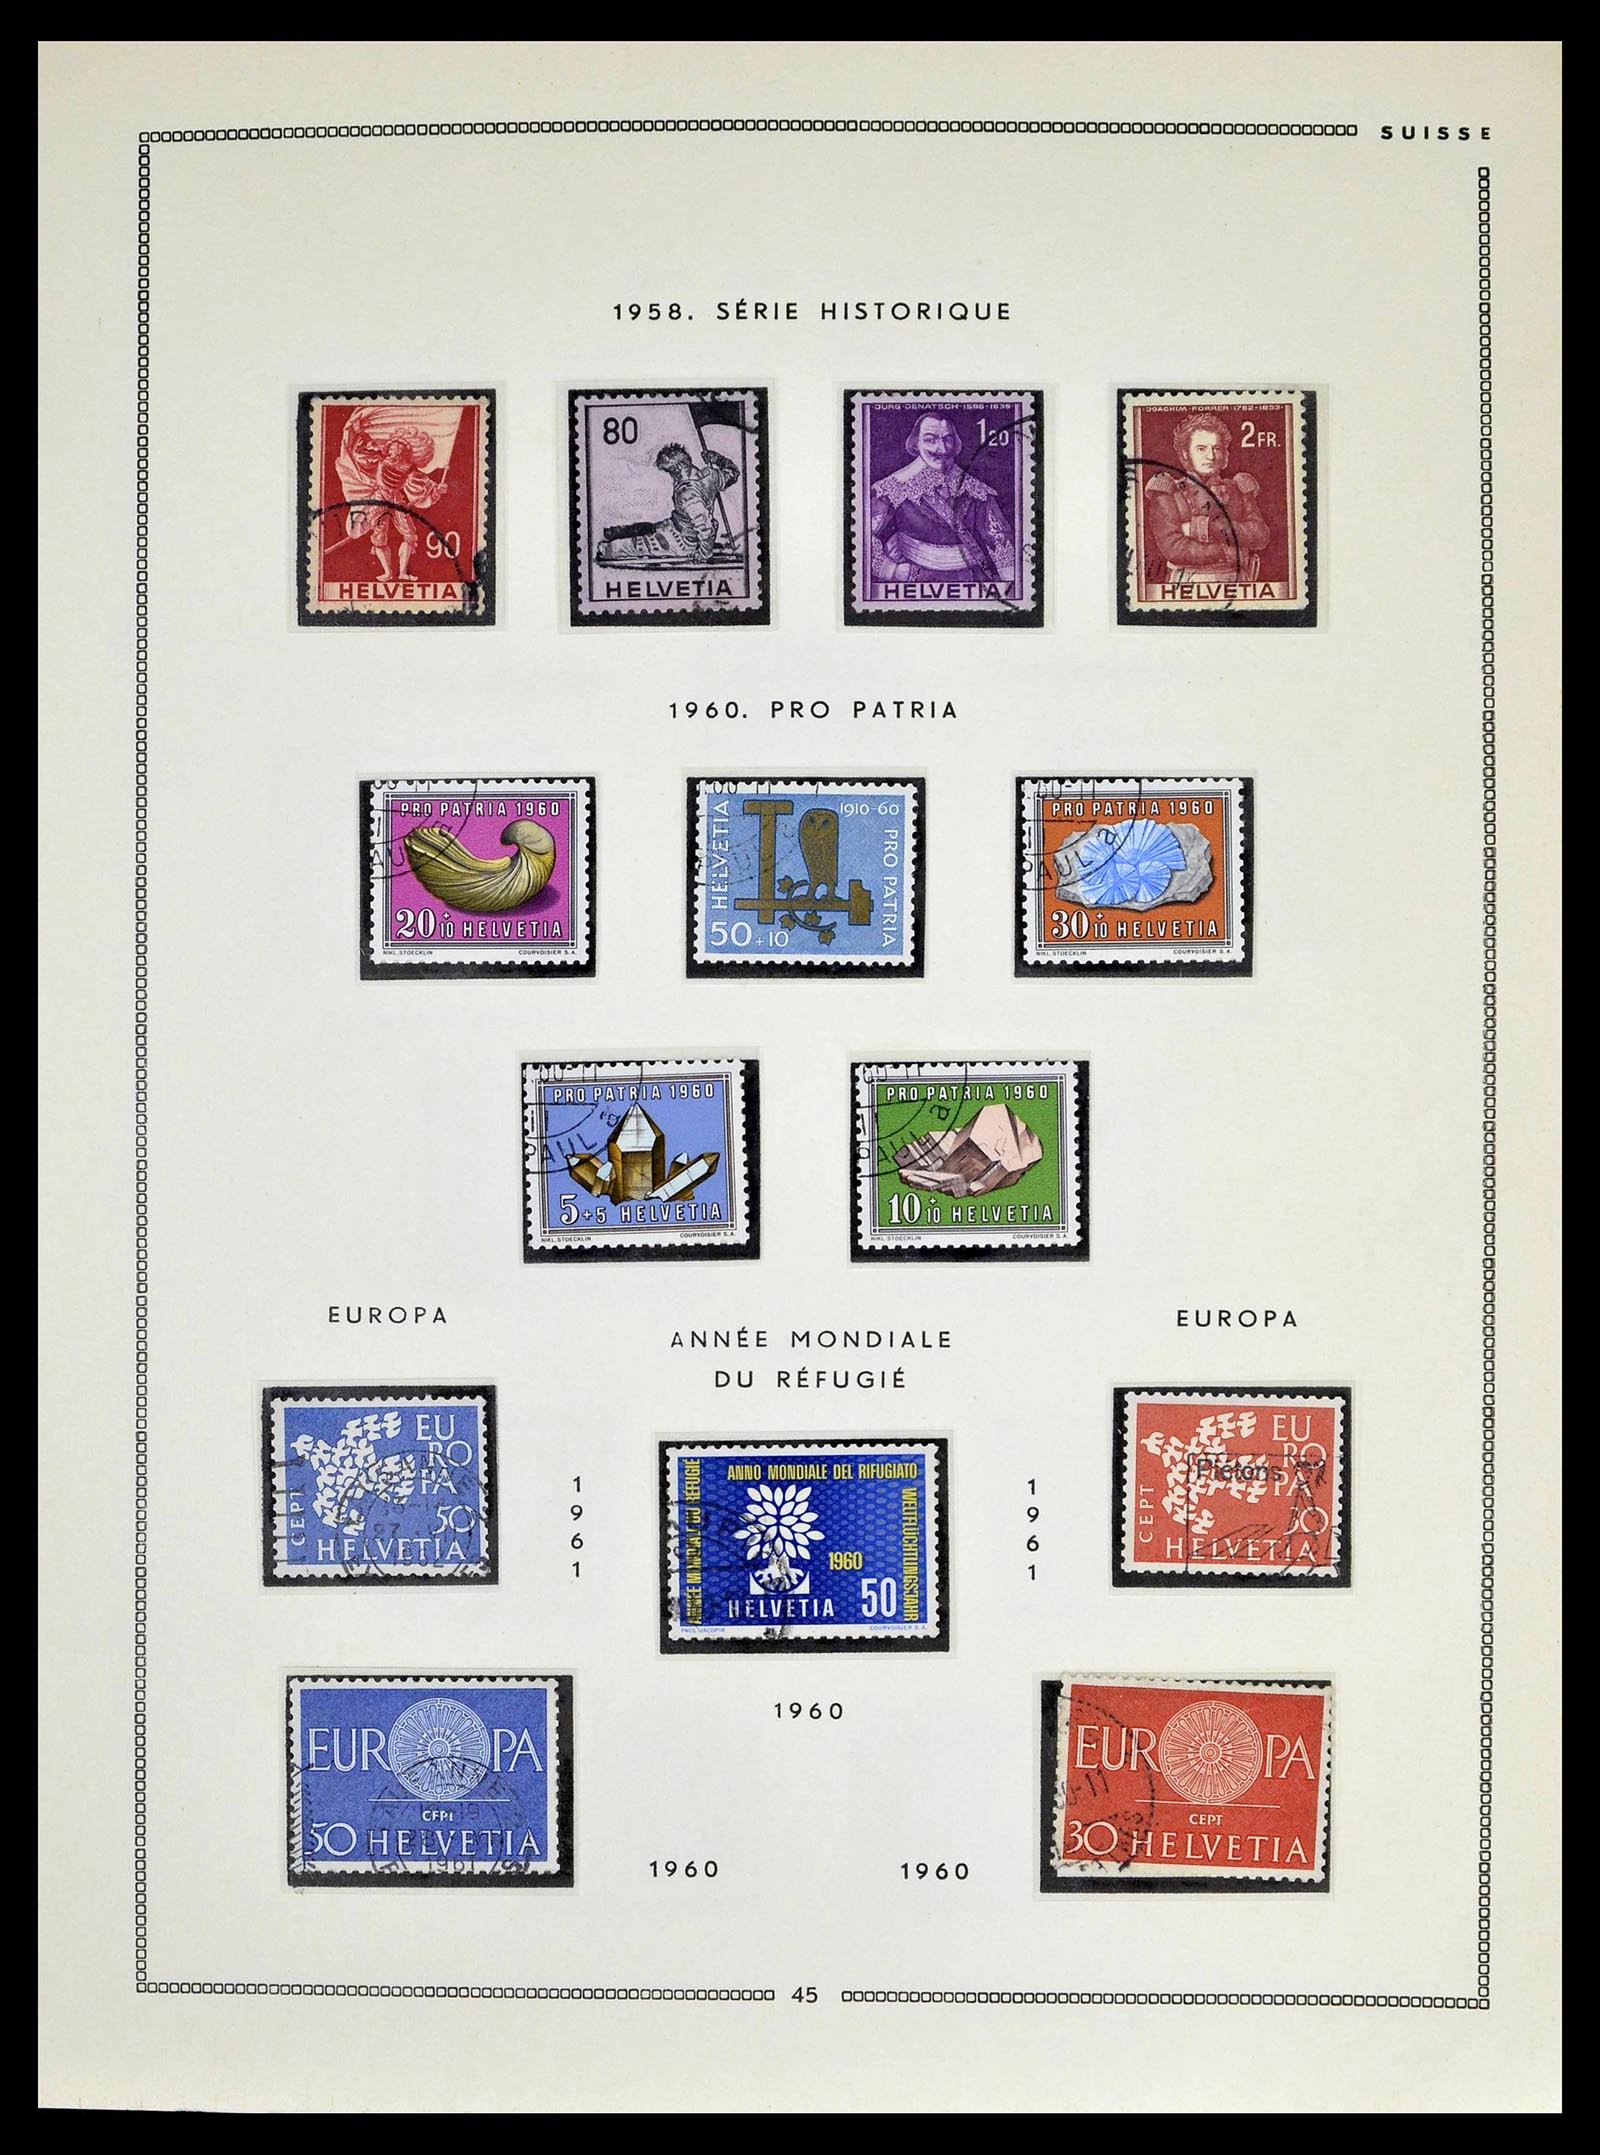 39094 0043 - Stamp collection 39094 Switzerland 1850-2005.